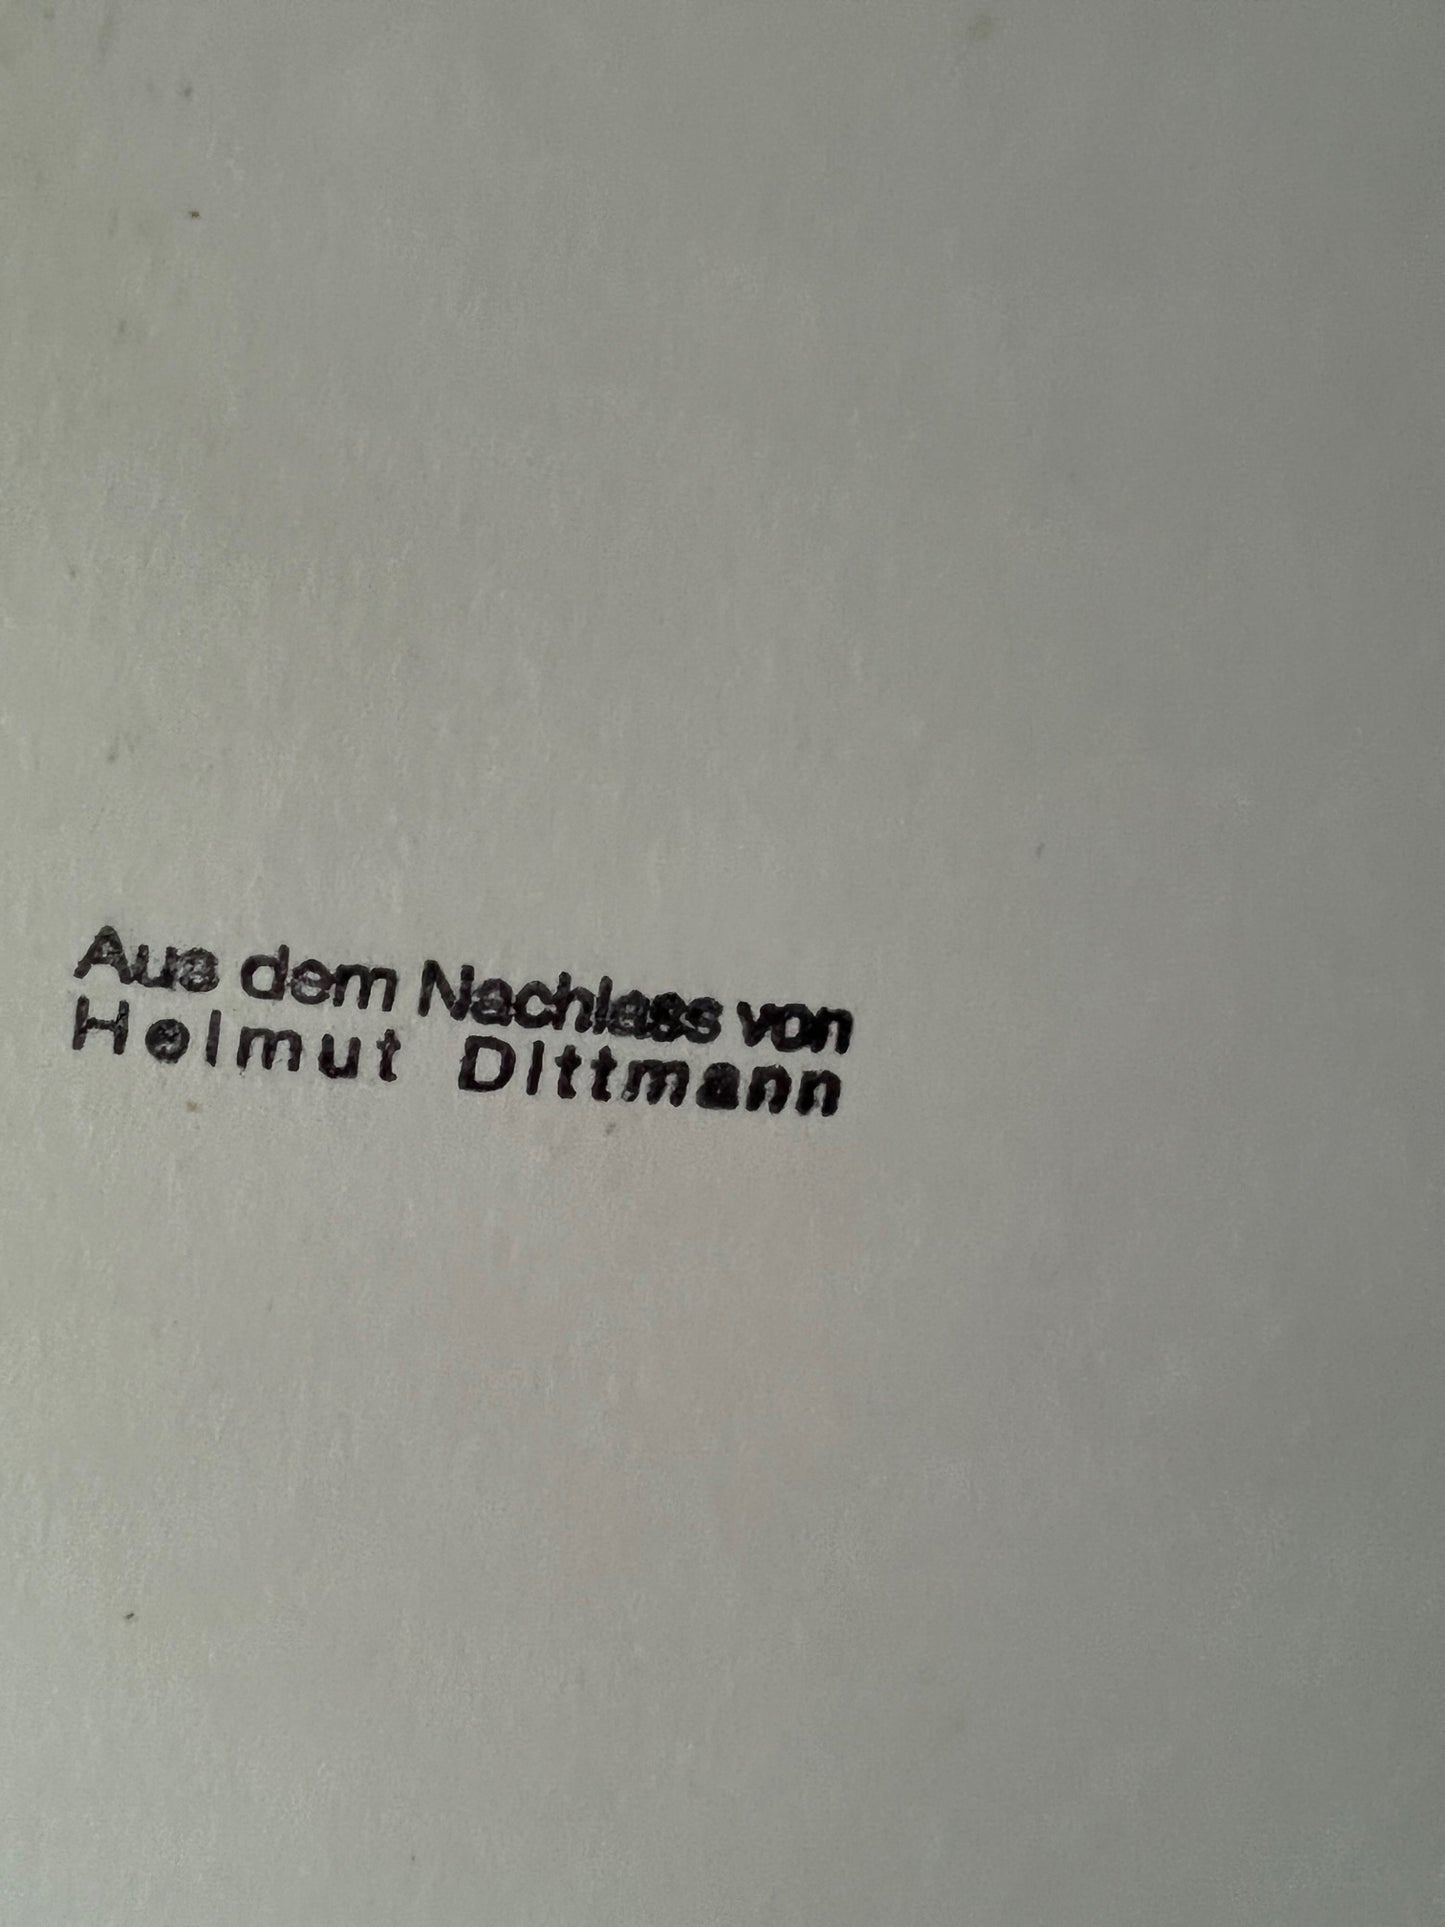 Inkdrawing on beautiful paper by Helmut Dittmann